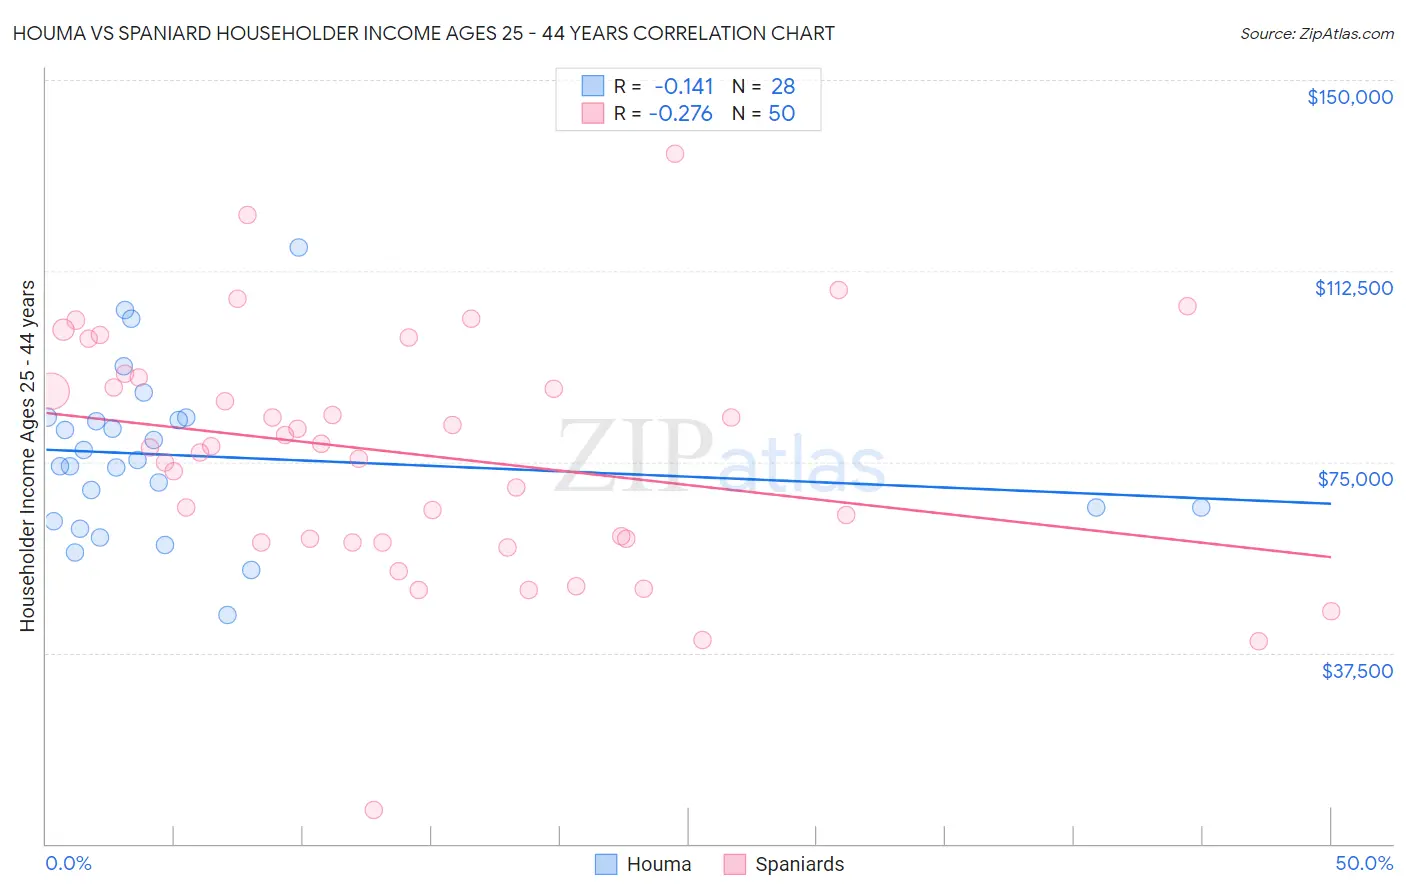 Houma vs Spaniard Householder Income Ages 25 - 44 years